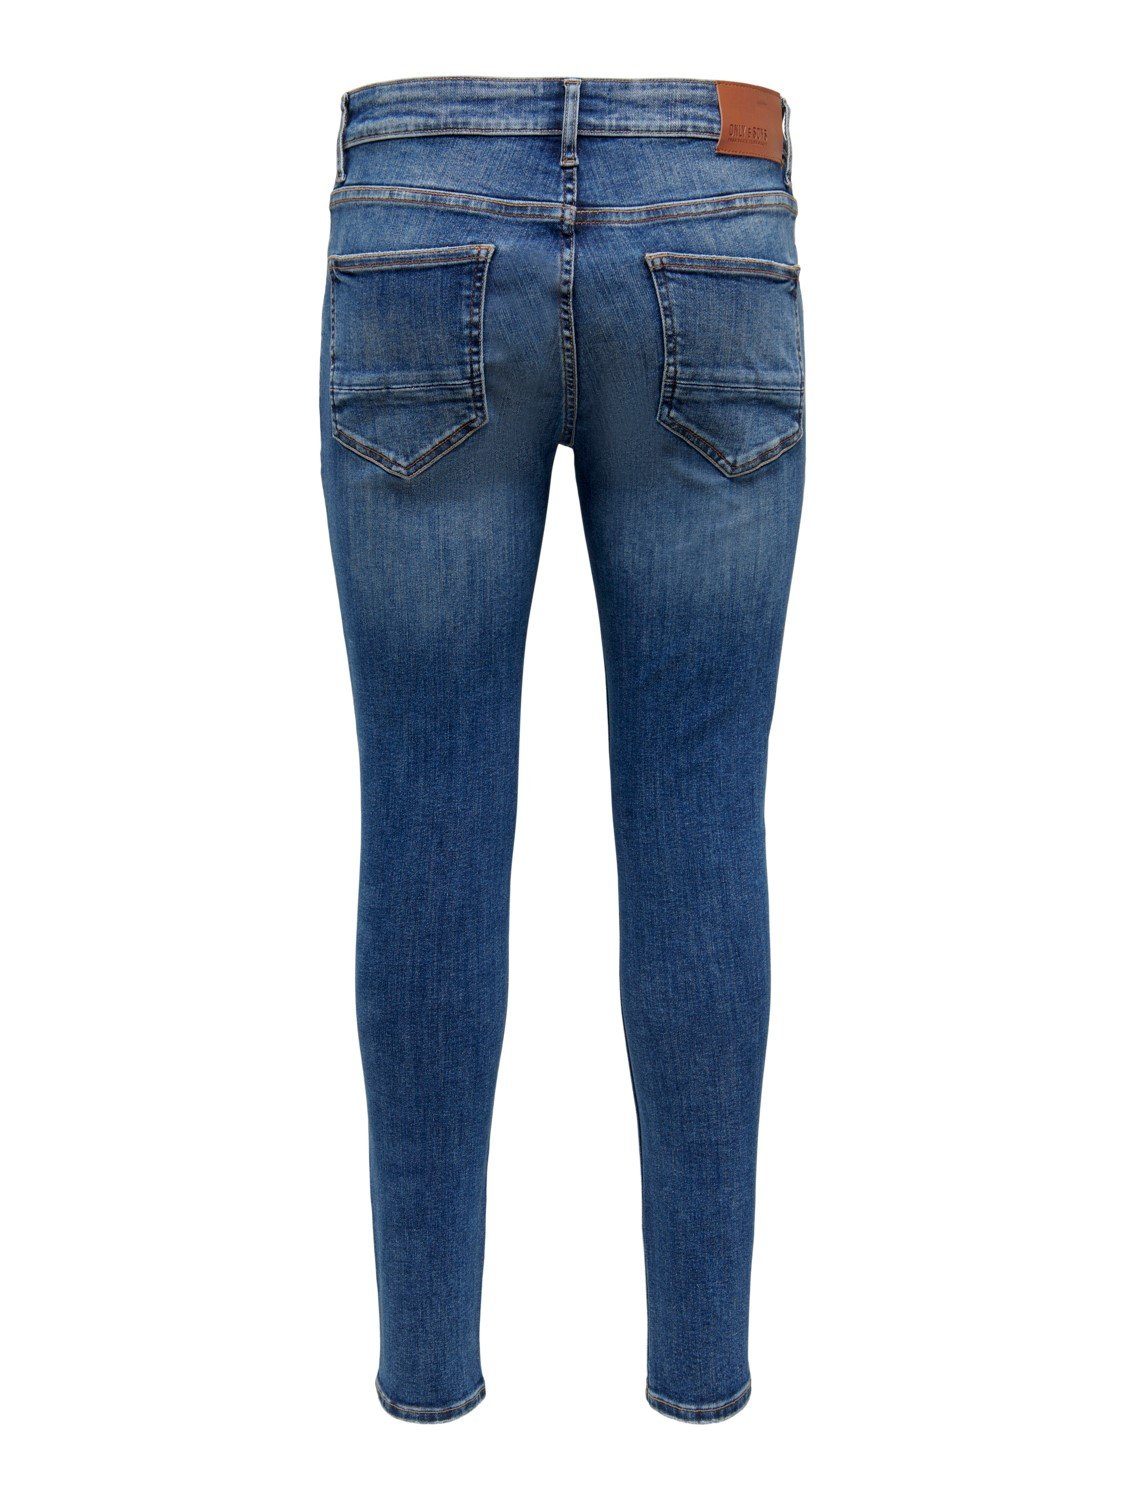 ONLY & SONS Jeans Basic 3977 ONSWARP Denim Slim-fit-Jeans Hose (1-tlg) Fit Pants in Skinny Stoned Blau-2 Washed